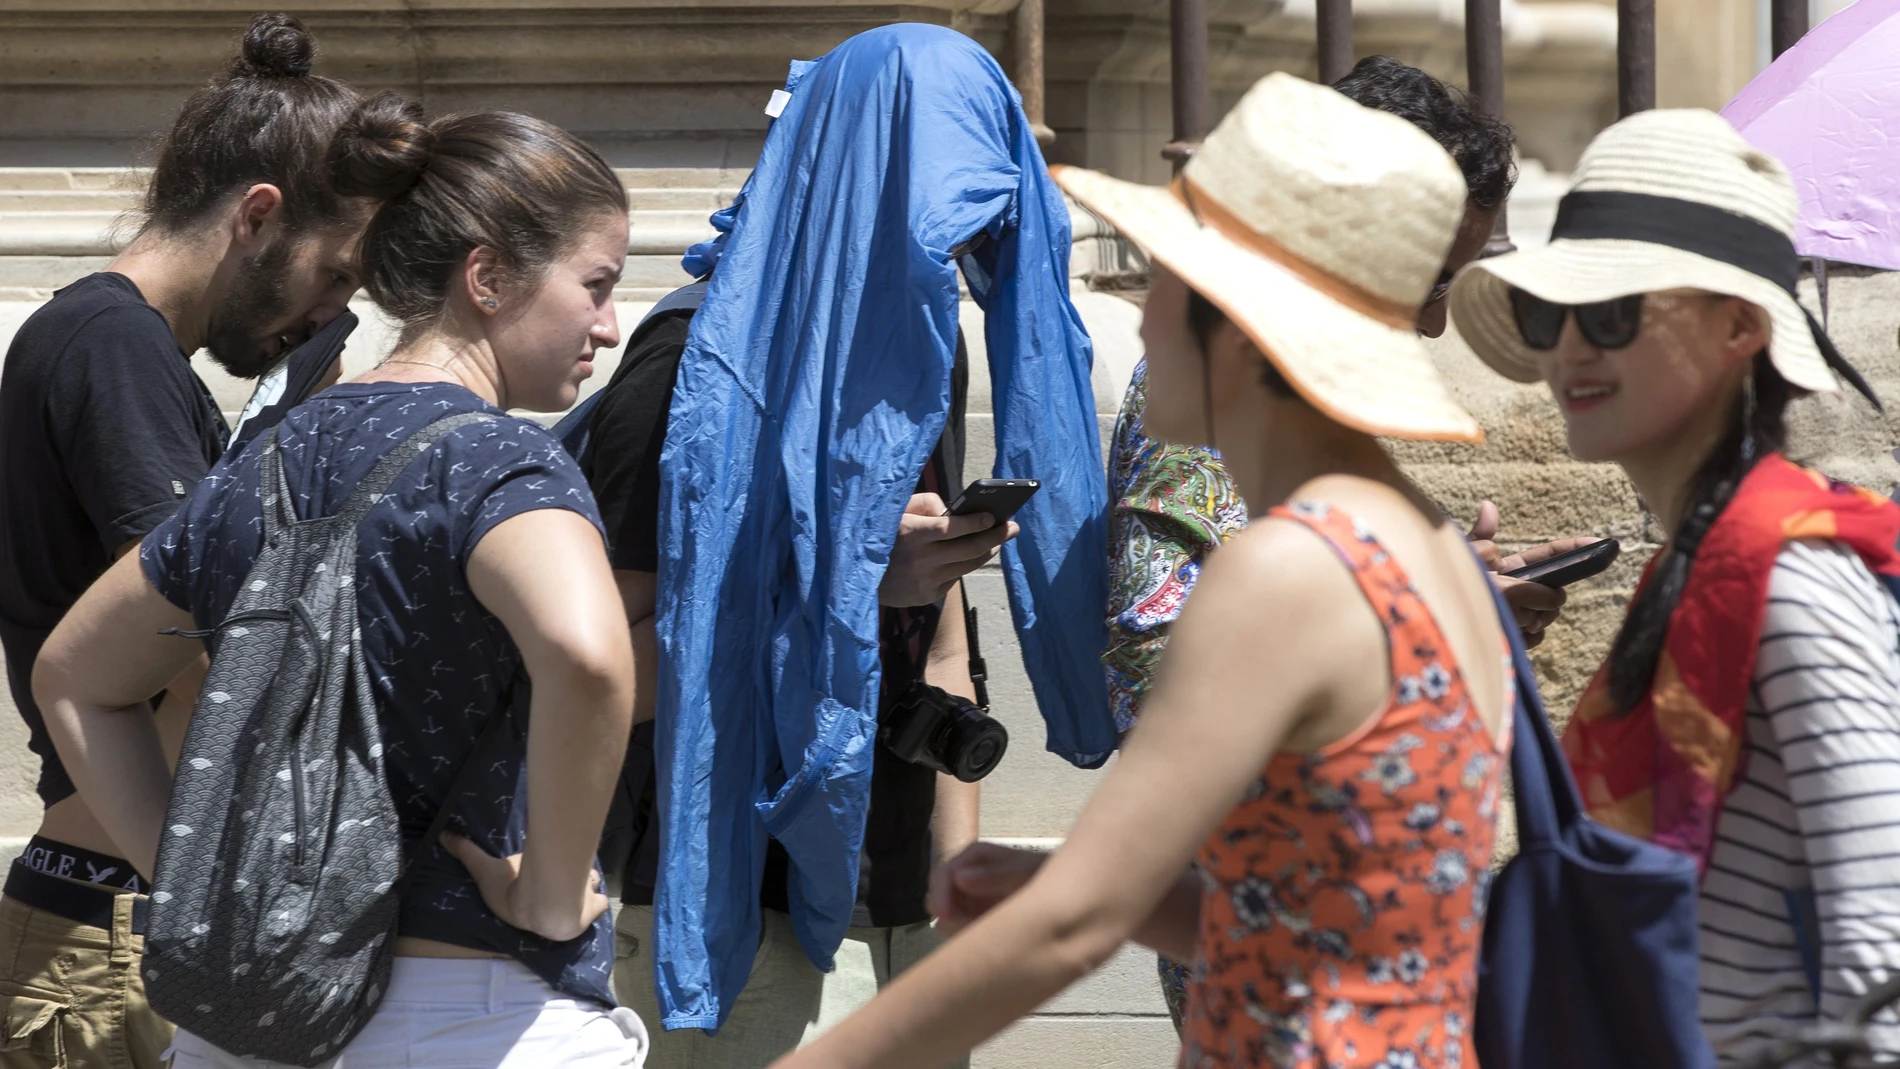 Un turista protegiéndose del sol con un chubasquero en la cabeza